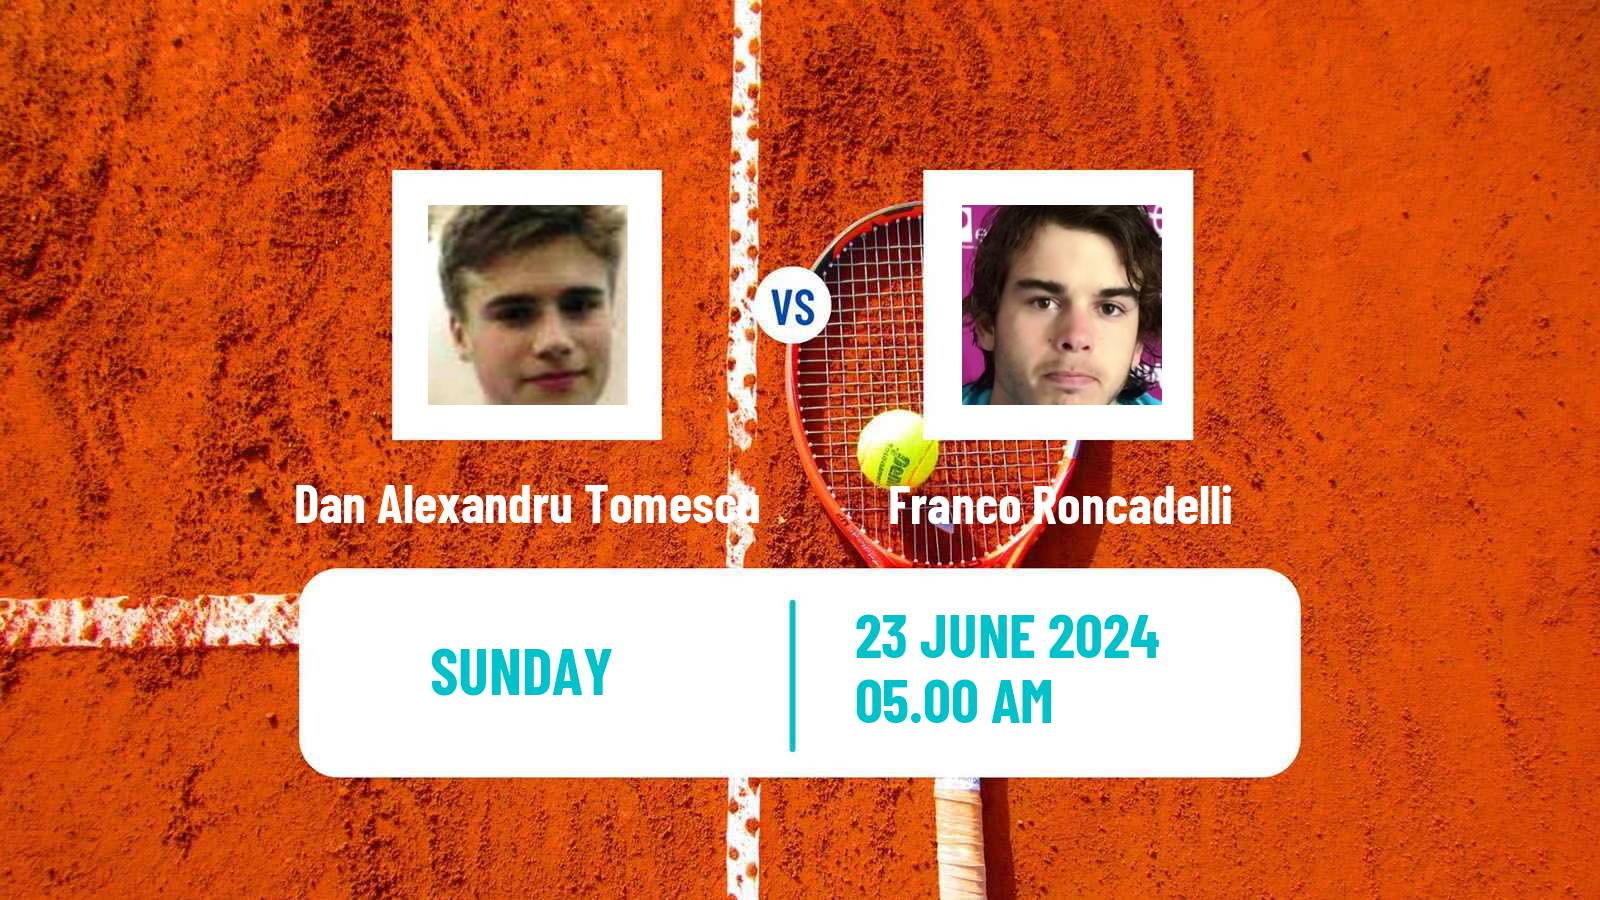 Tennis ITF M15 Nyiregyhaza 2 Men Dan Alexandru Tomescu - Franco Roncadelli